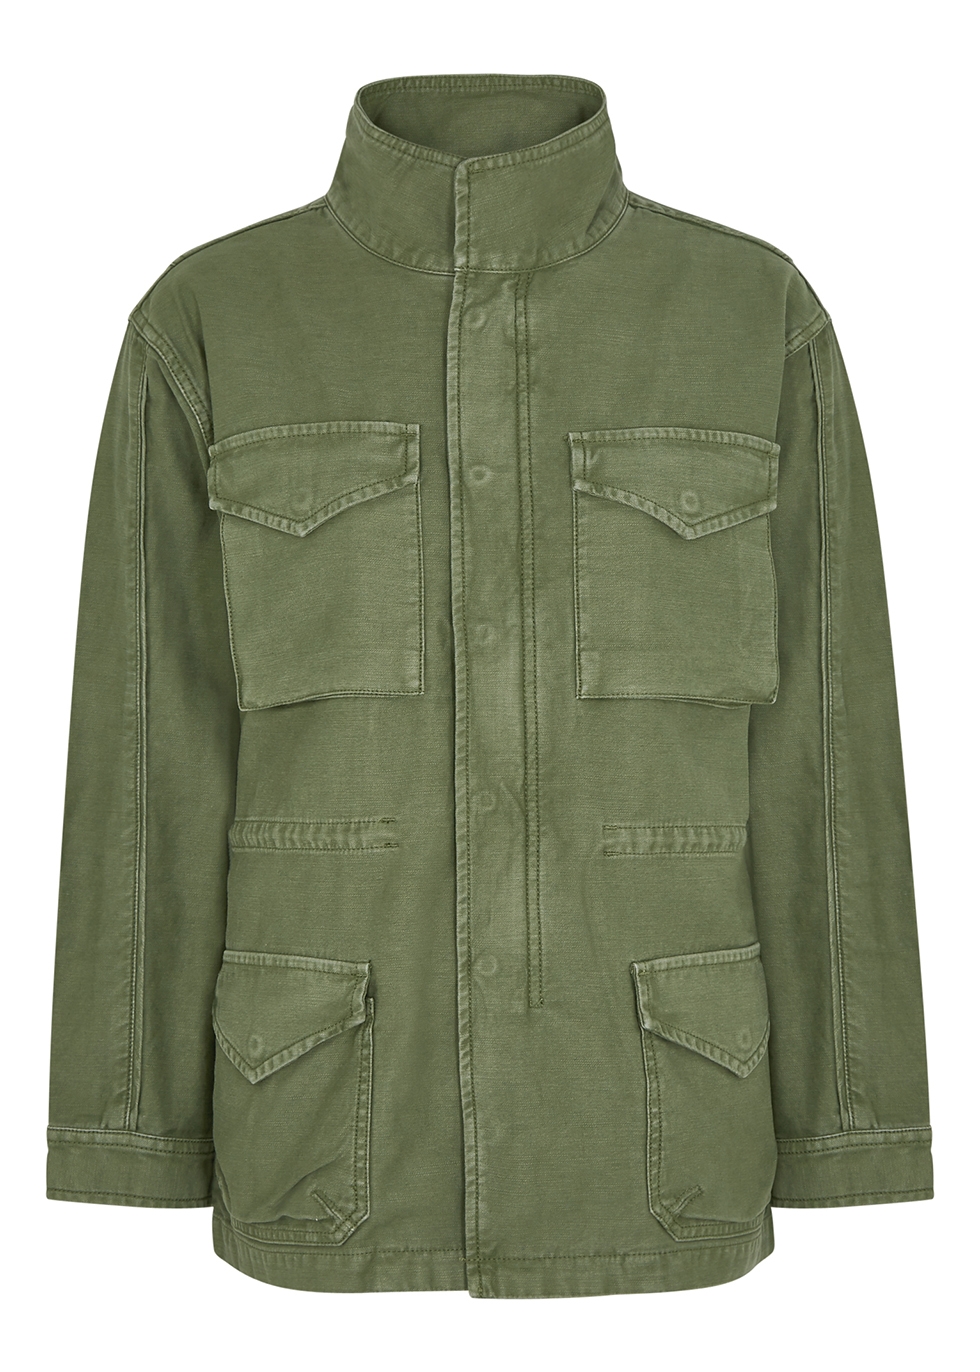 Service green cotton cargo jacket